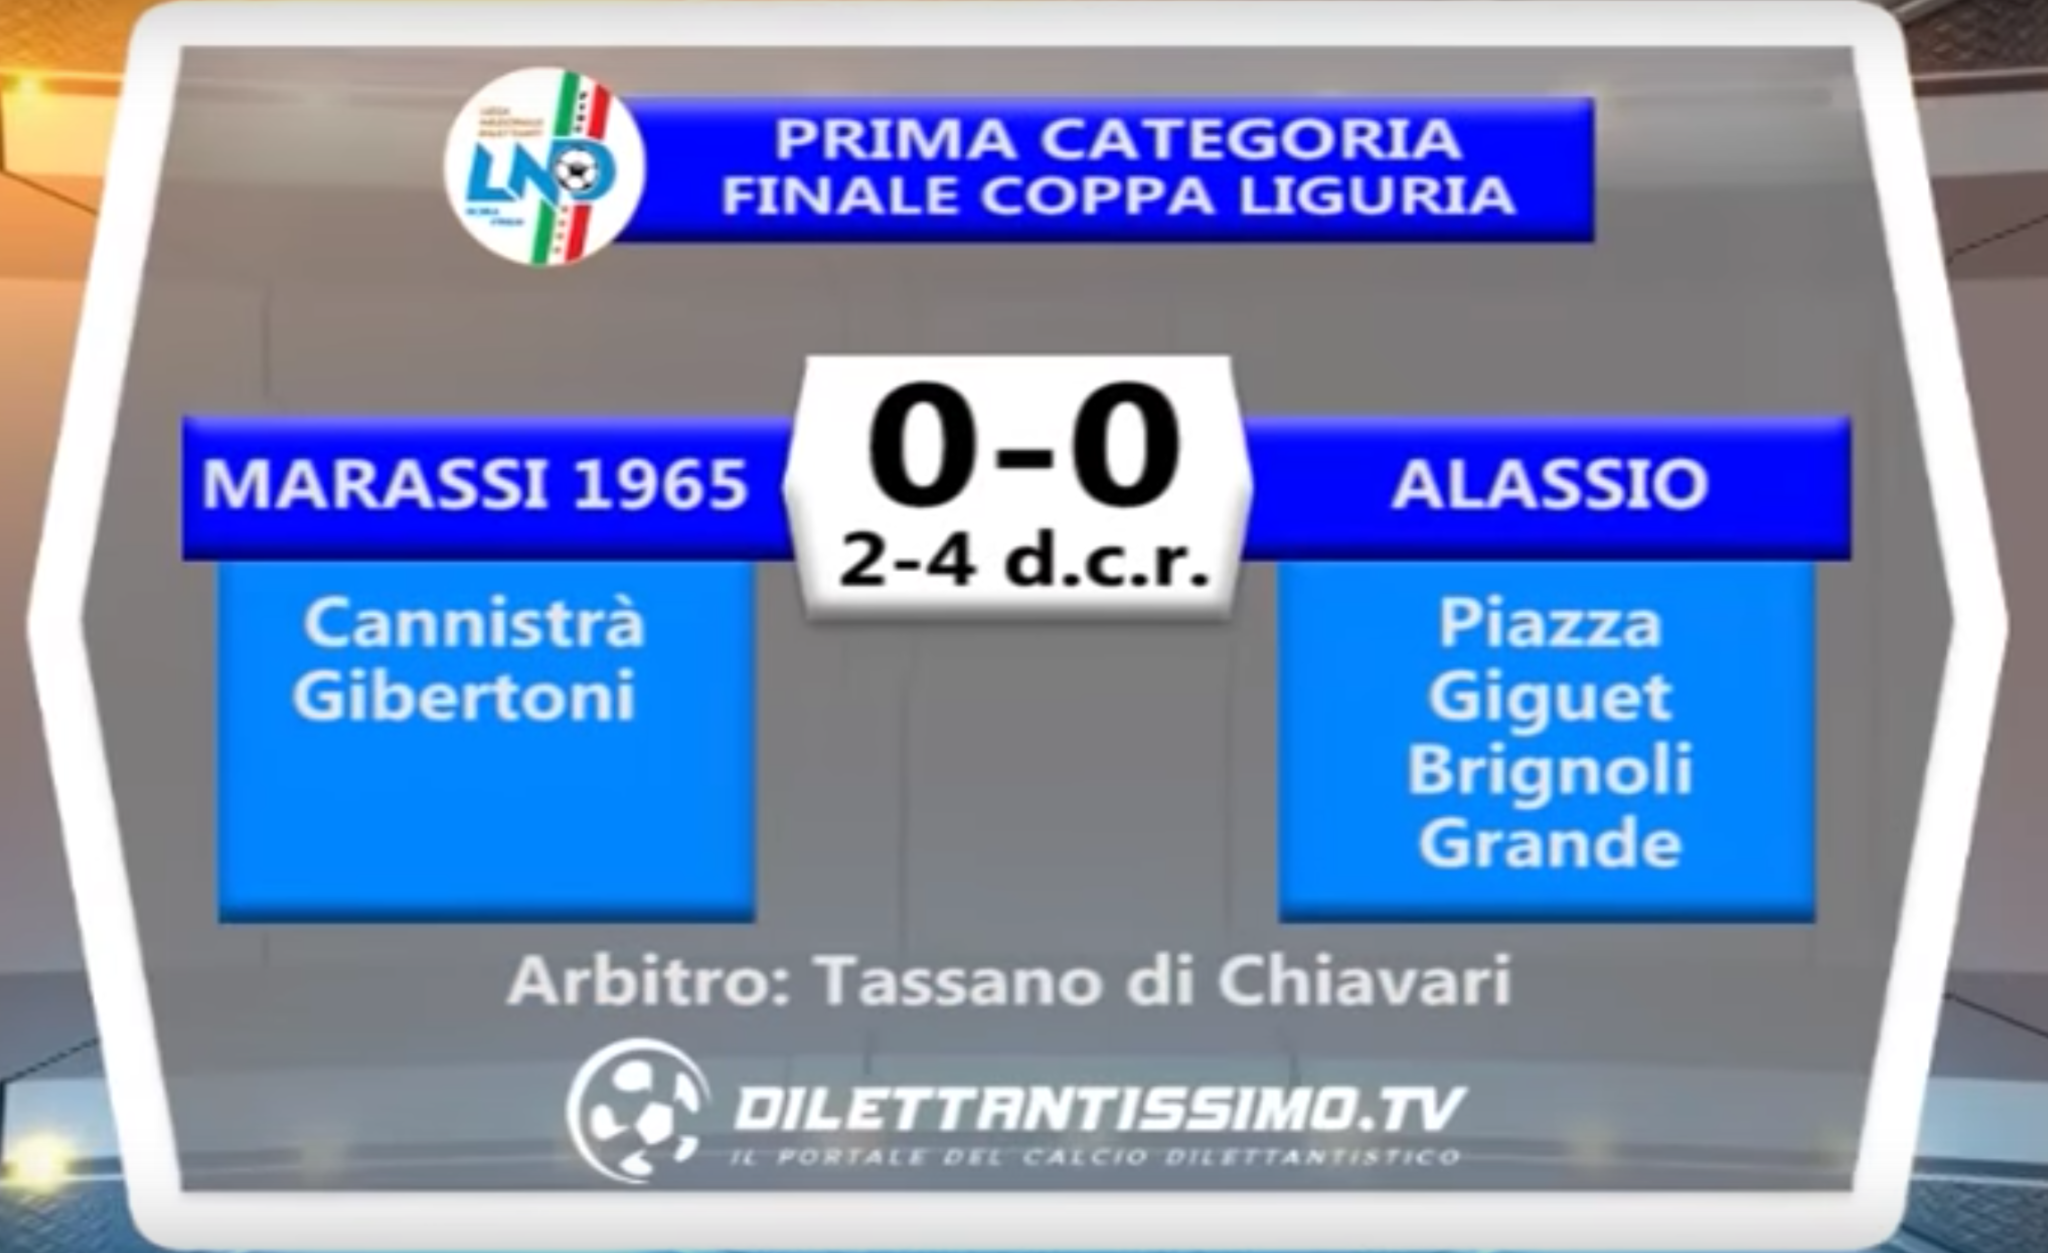 MARASSI 1965 - ALASSIO 0-0 (2-4 d.c.r.) - FINALE COPPA LIGURIA PRIMA CATEGORIA